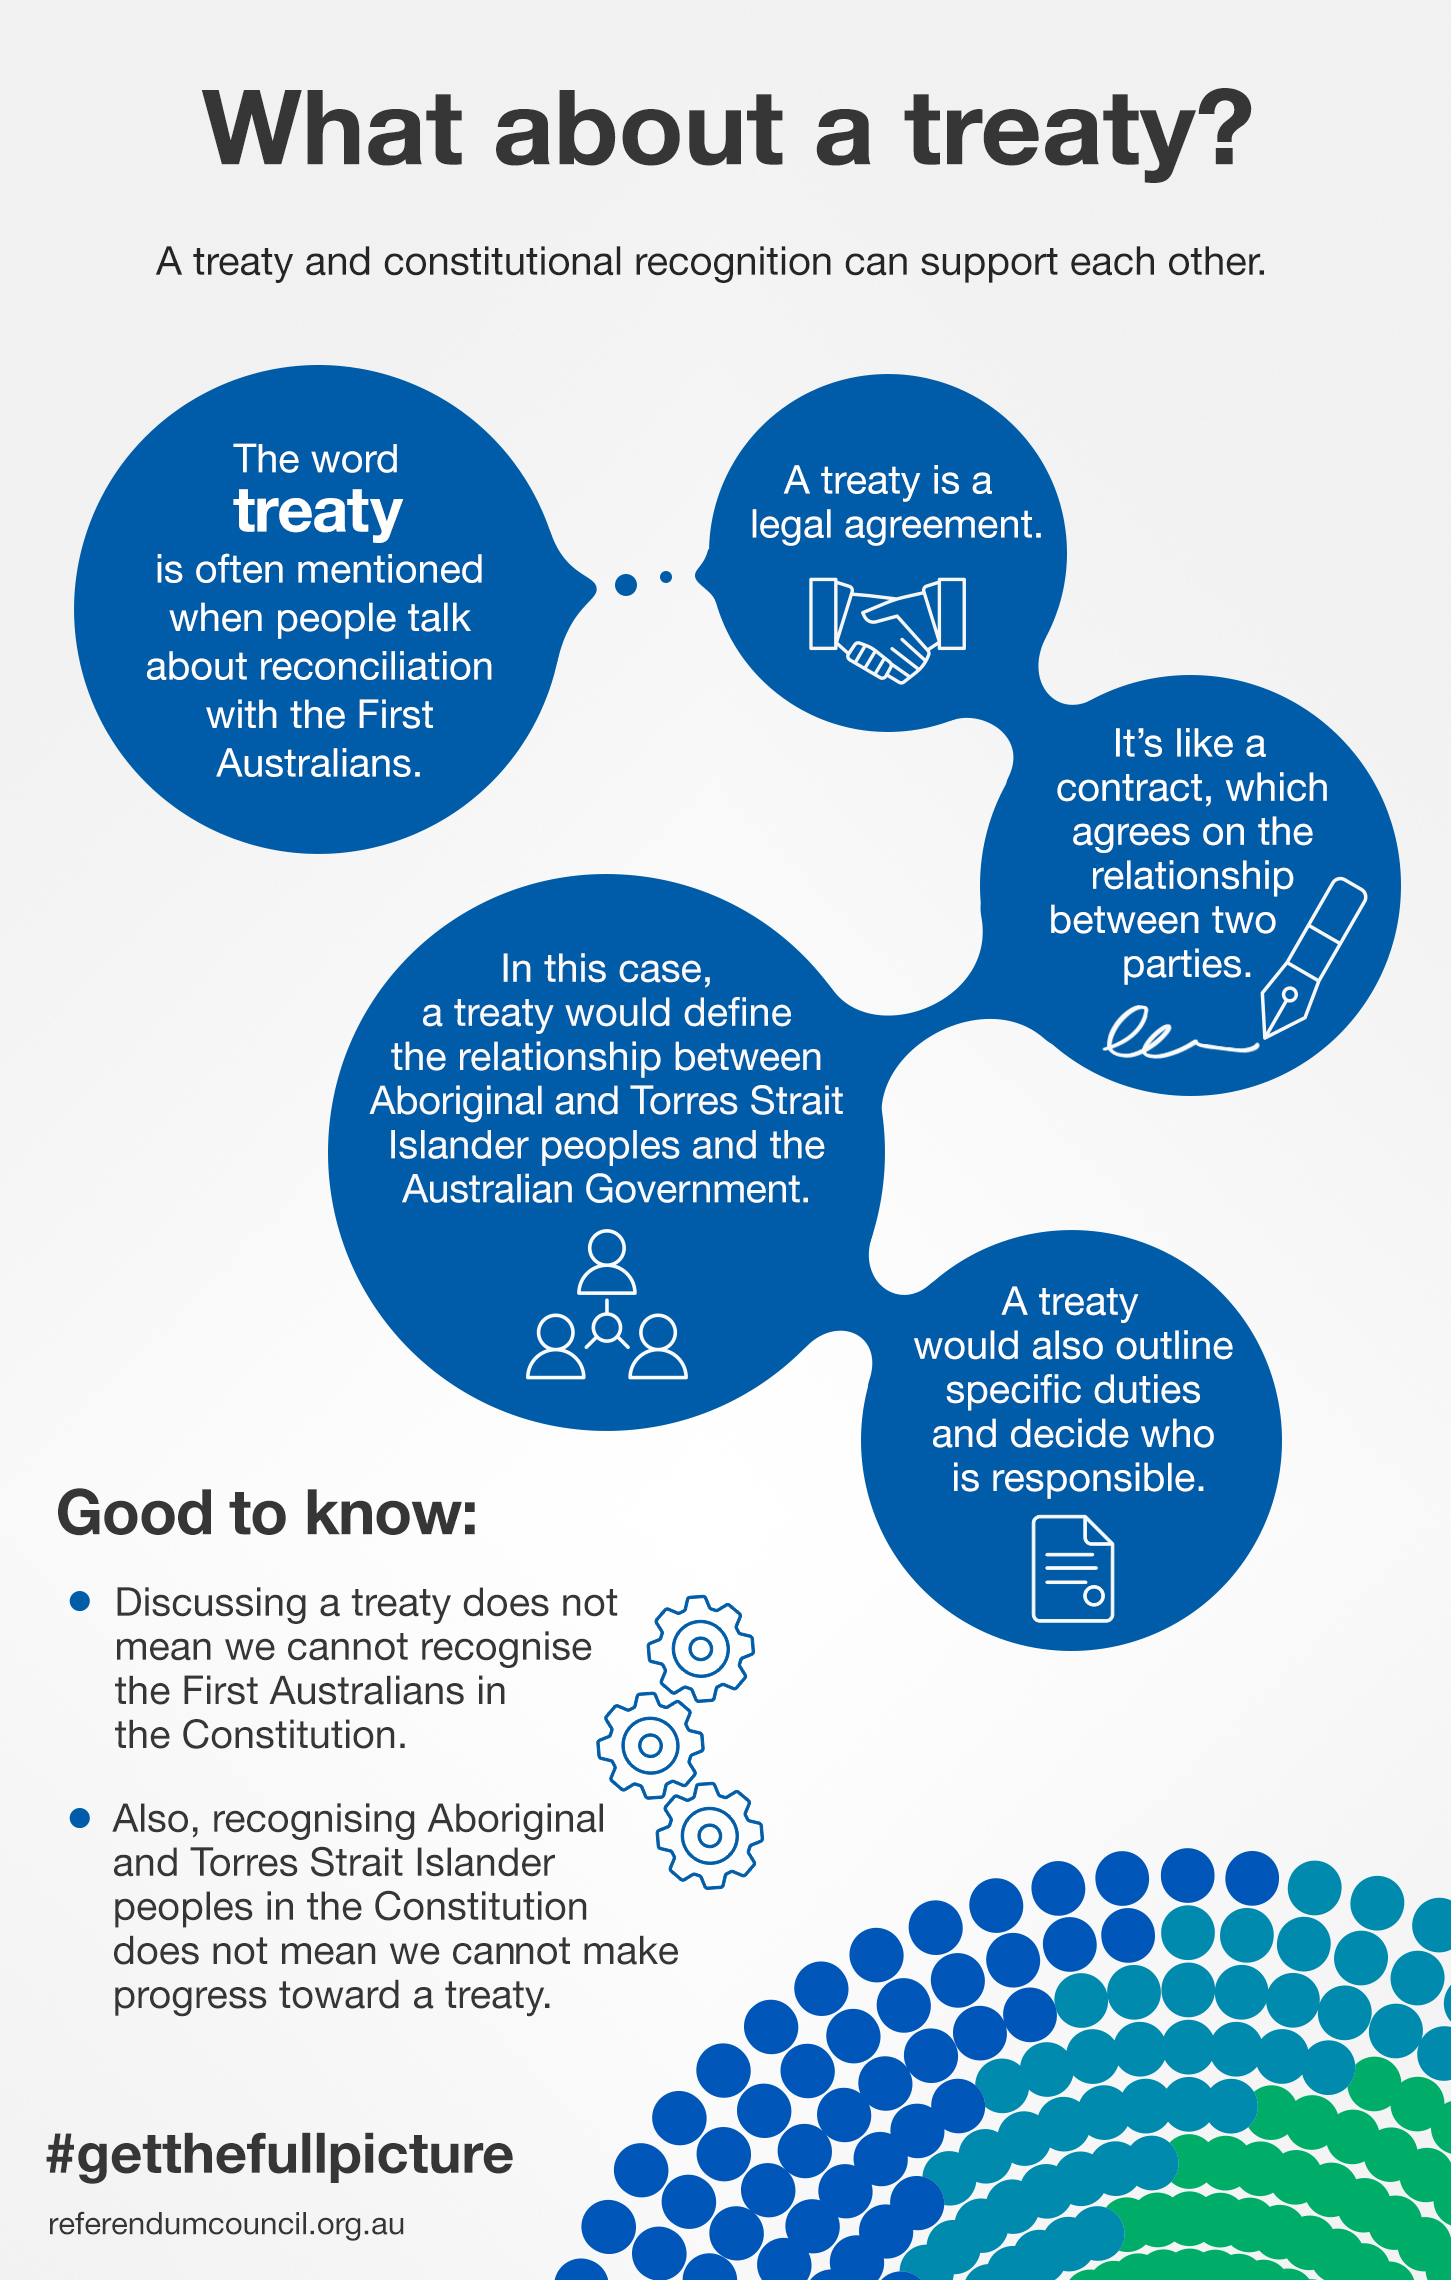 Information on treaties